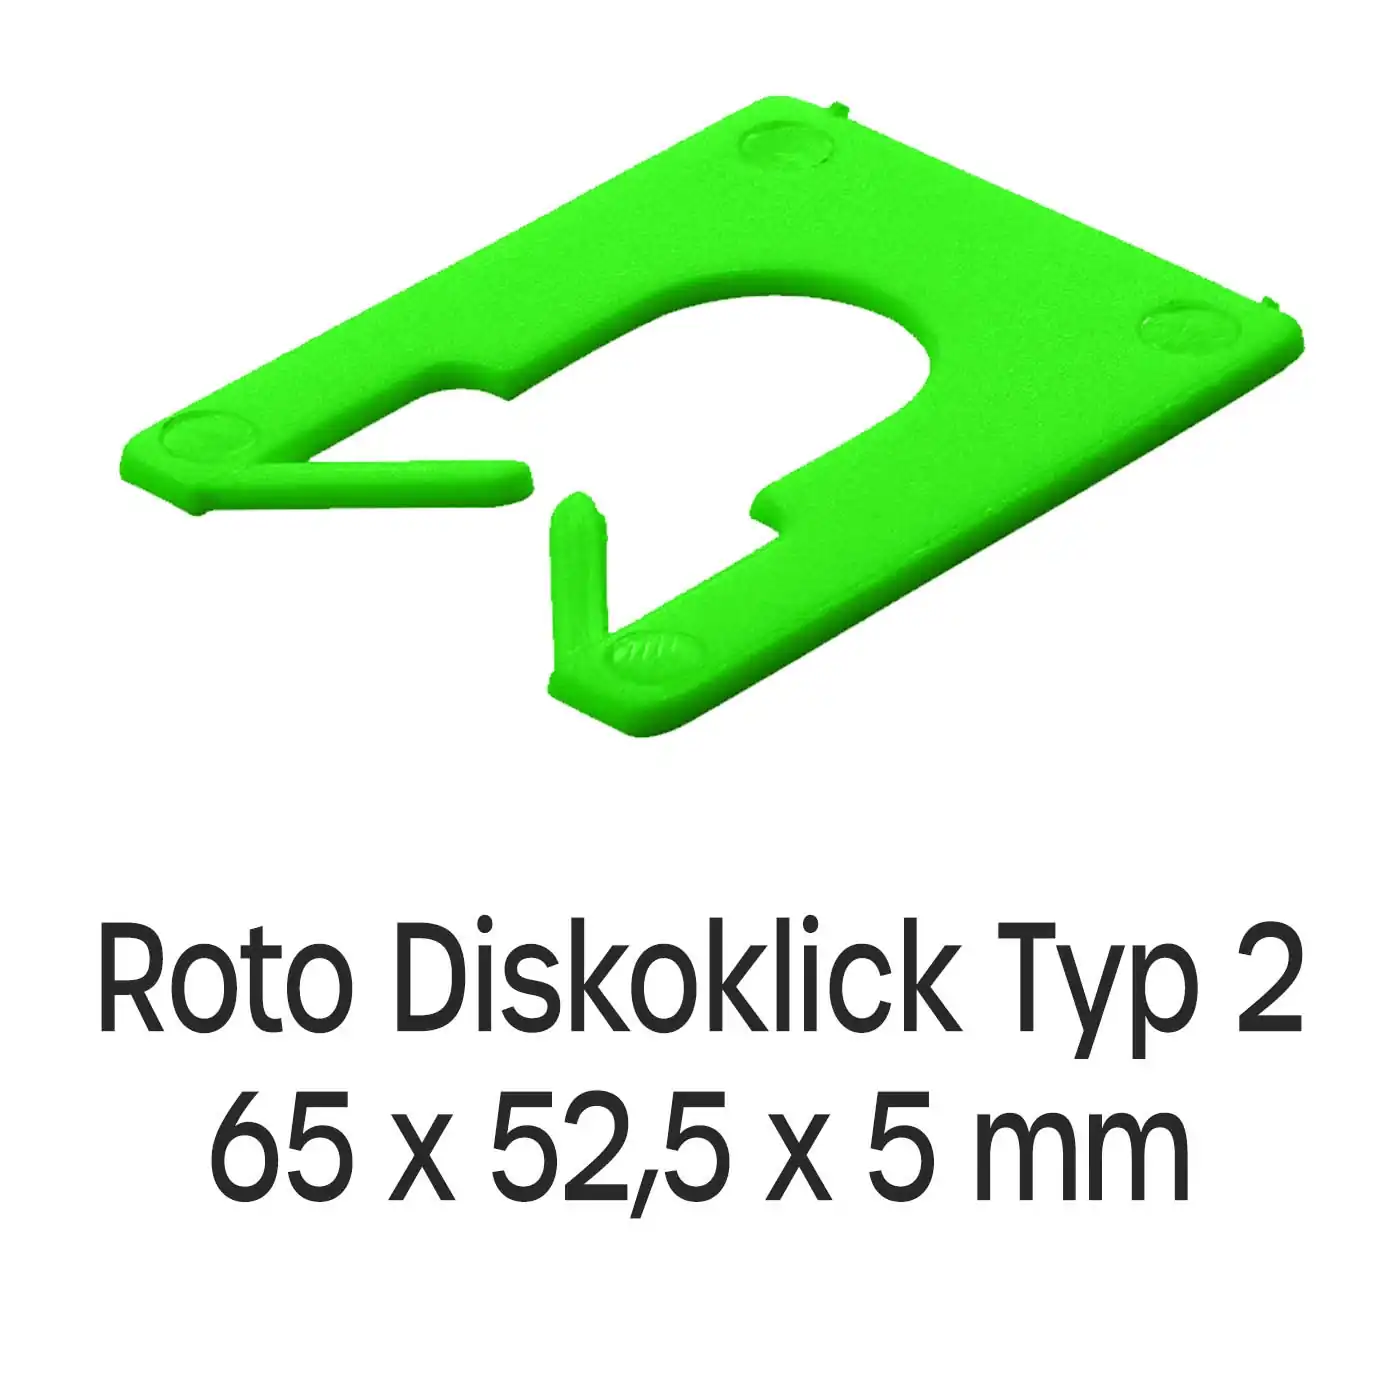 Distanzplatten Roto Diskoklick Typ 2 65 x 52,5 x 5 mm 1000 Stück